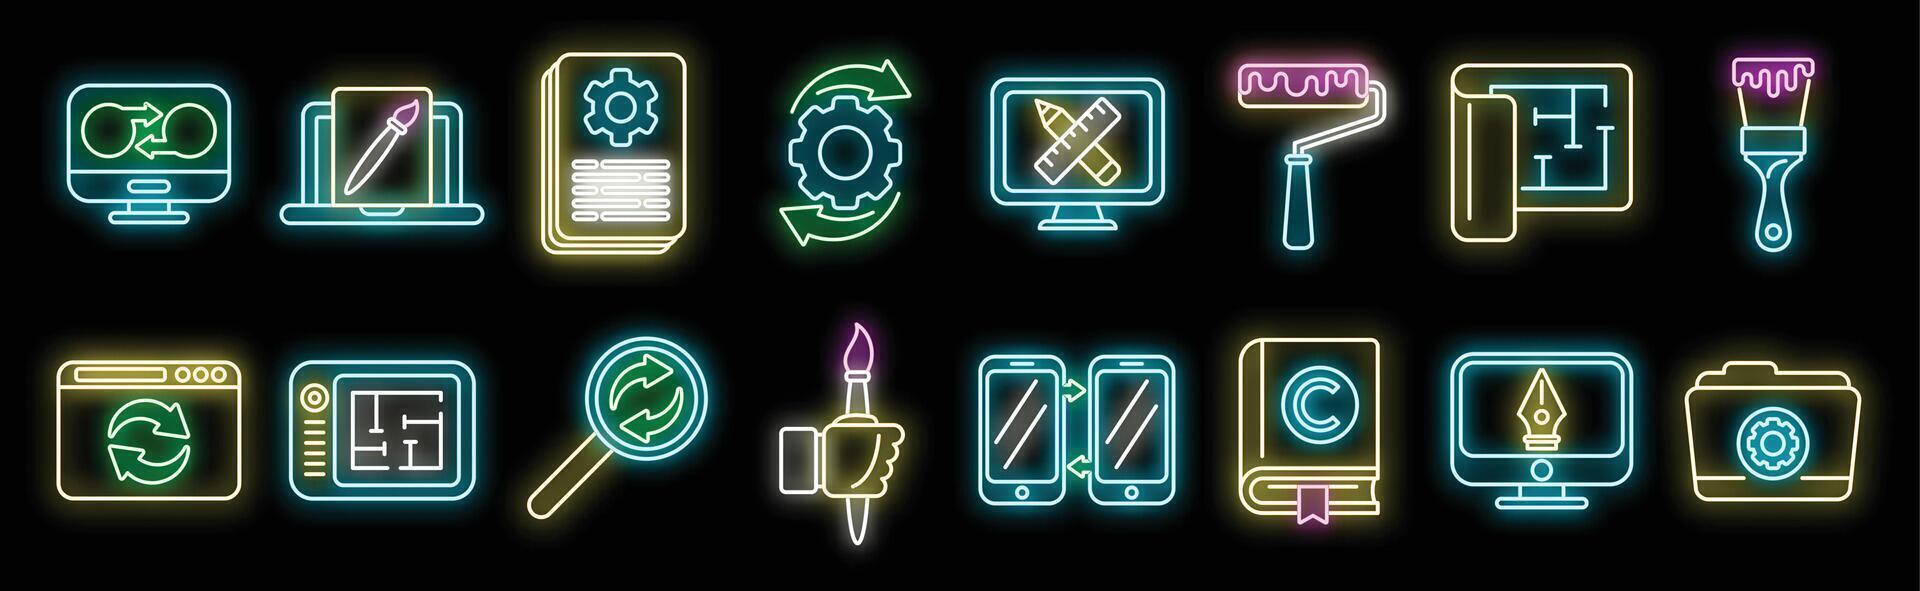 redesenhar ícones definir vetor neon